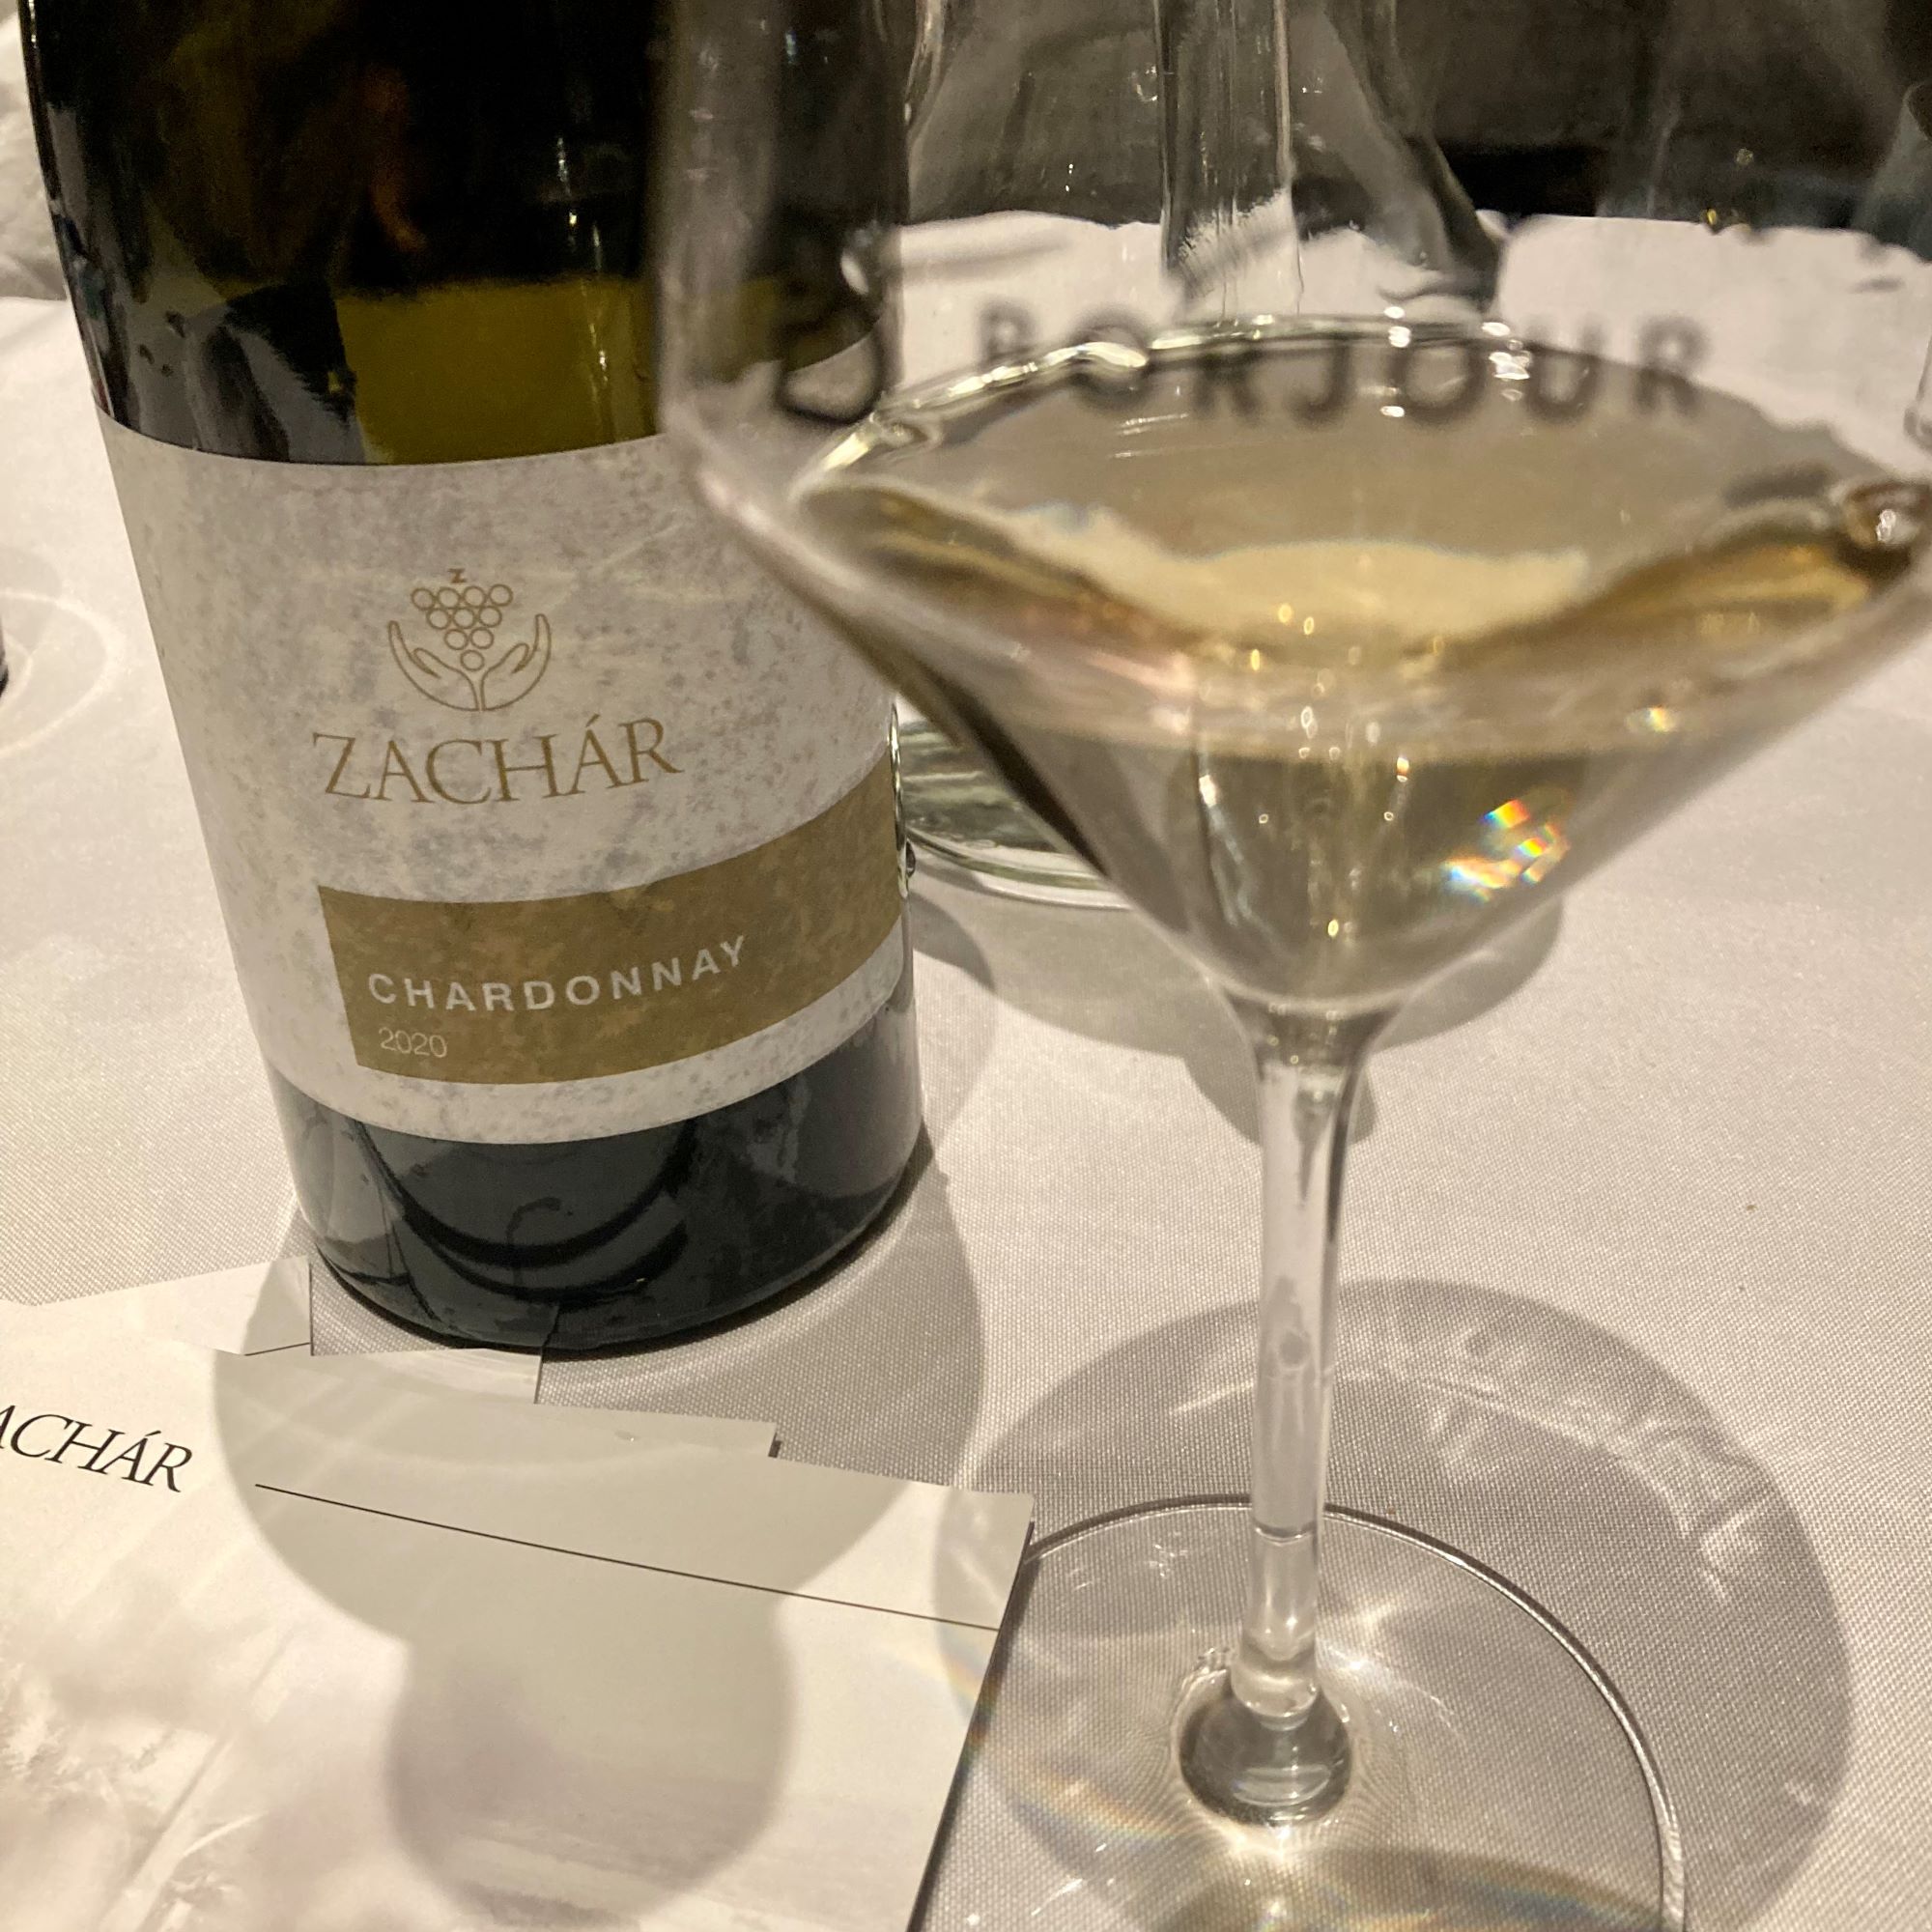 Zachar Pince Chardonnay Sopron